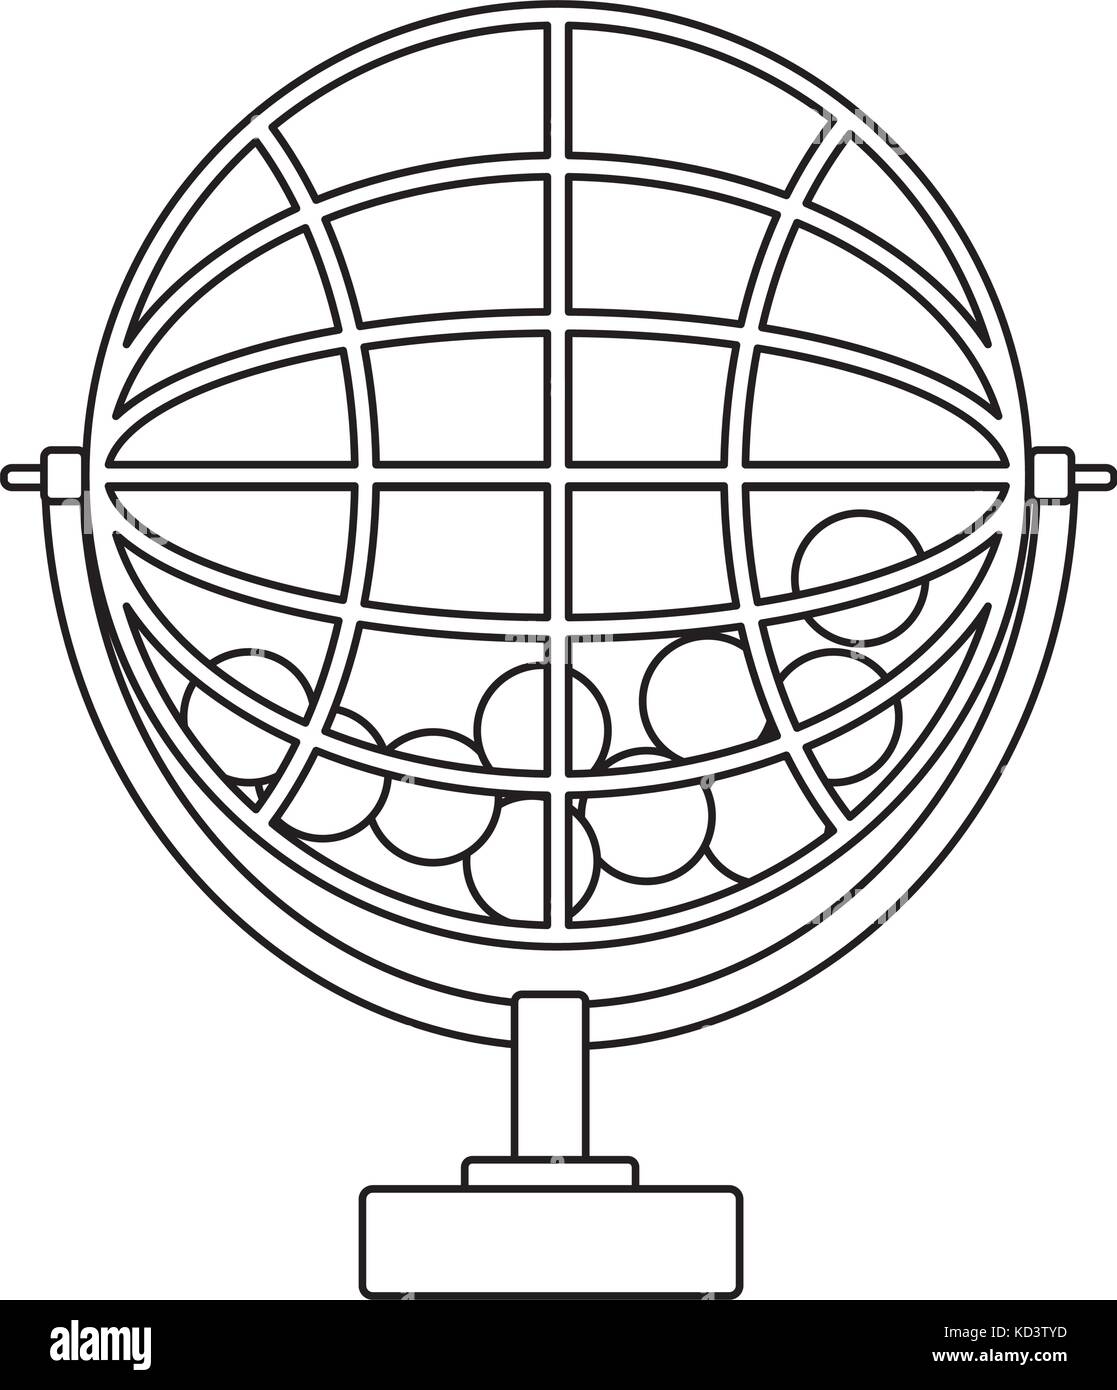 lottery wheel icon Stock Vector